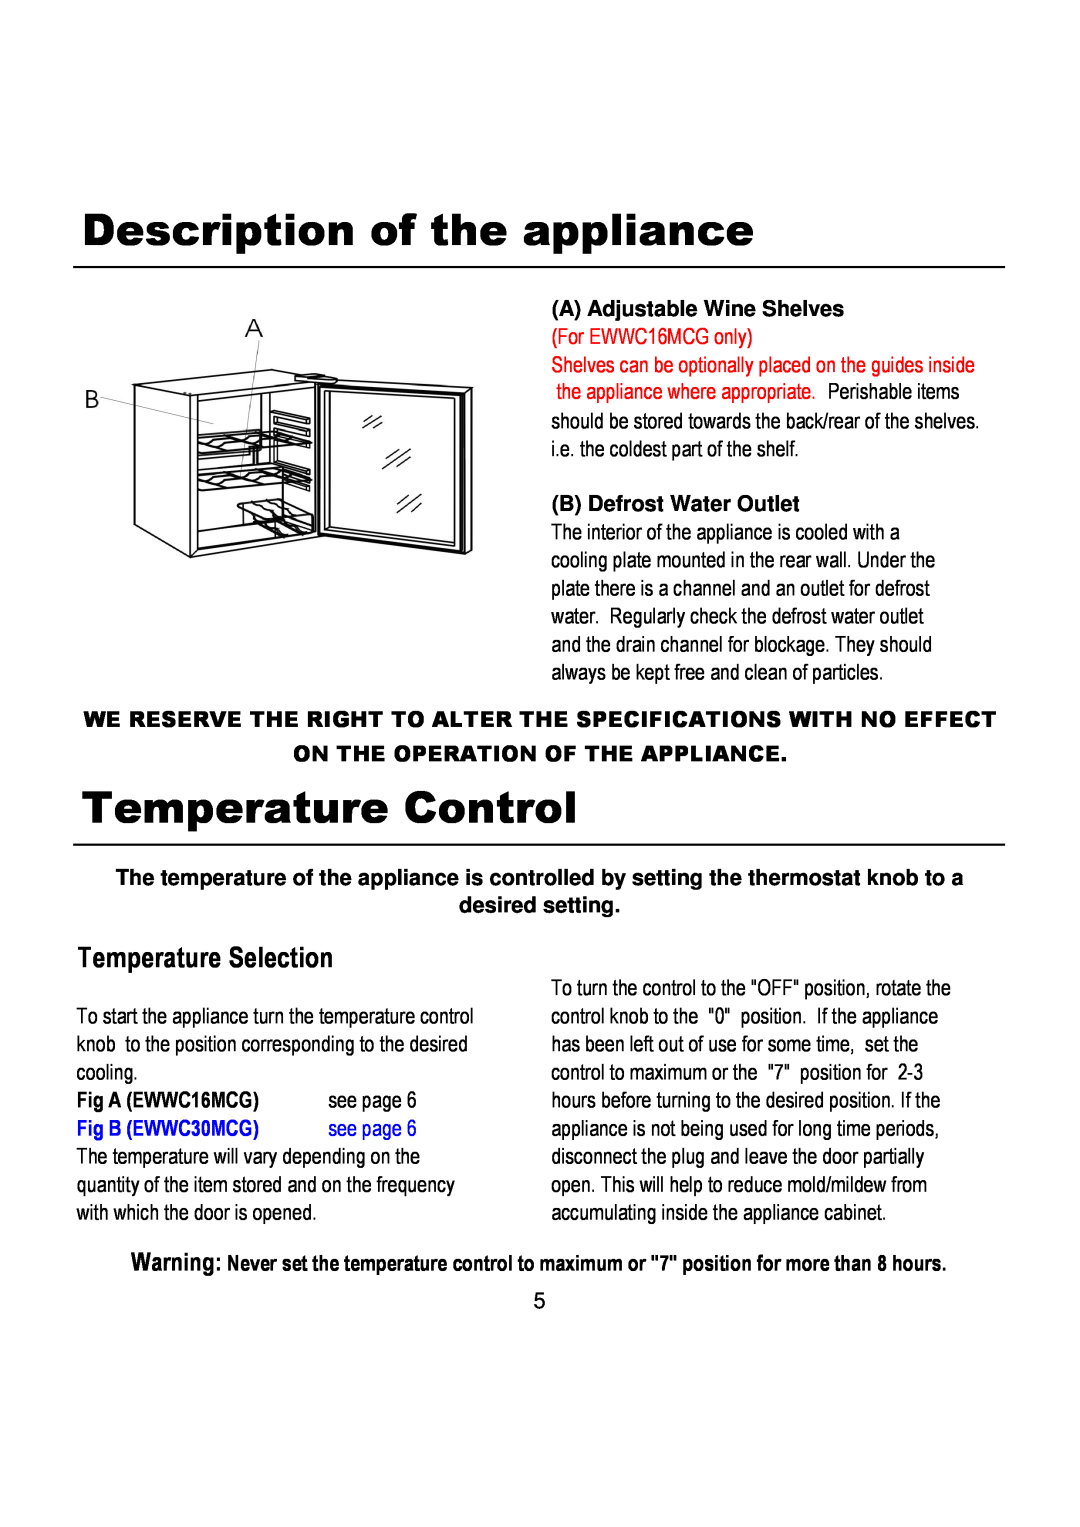 Magic Chef EWWC30MCG Description of the appliance, Temperature Control, Temperature Selection, A Adjustable Wine Shelves 